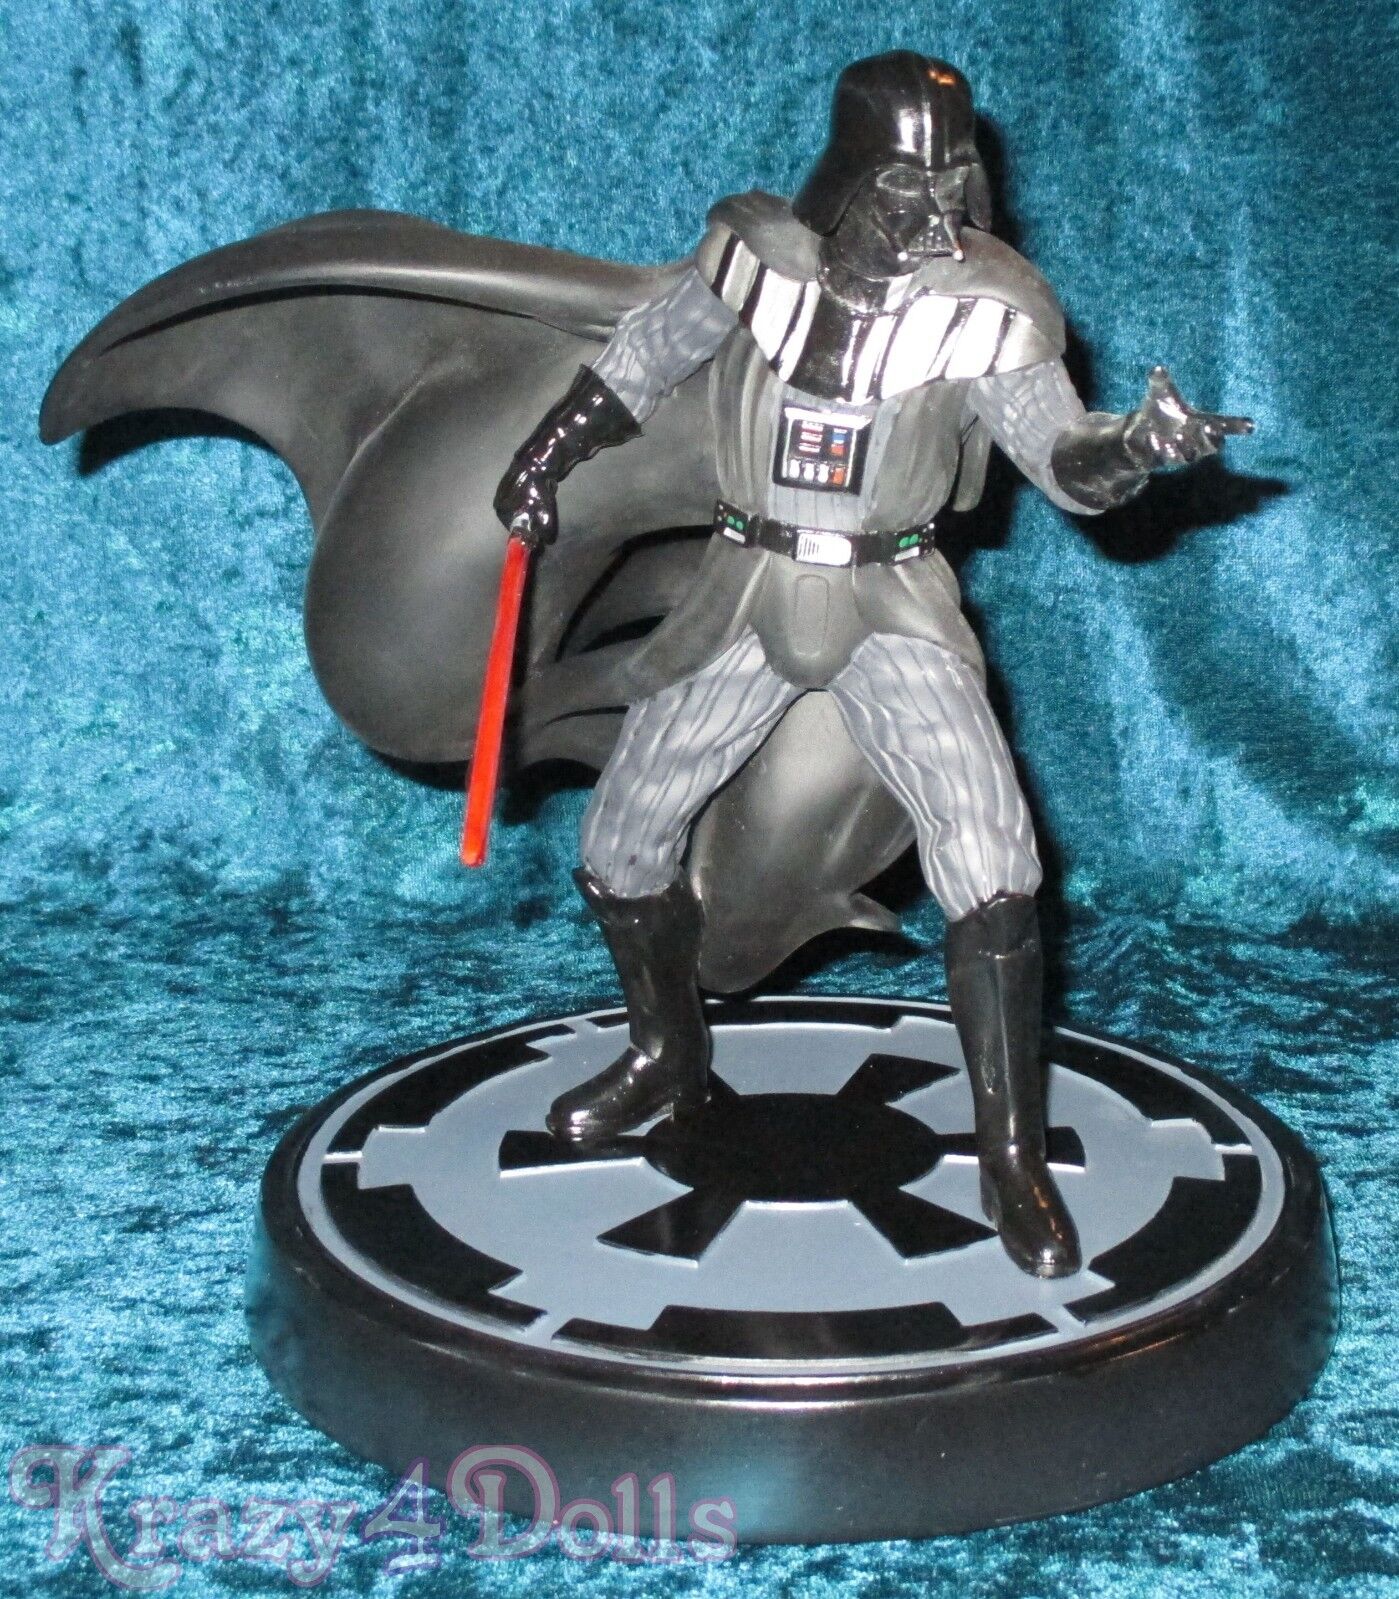 Disney Store Star Wars Darth Vader Limited Edition 500 Statue/ Figure/Doll